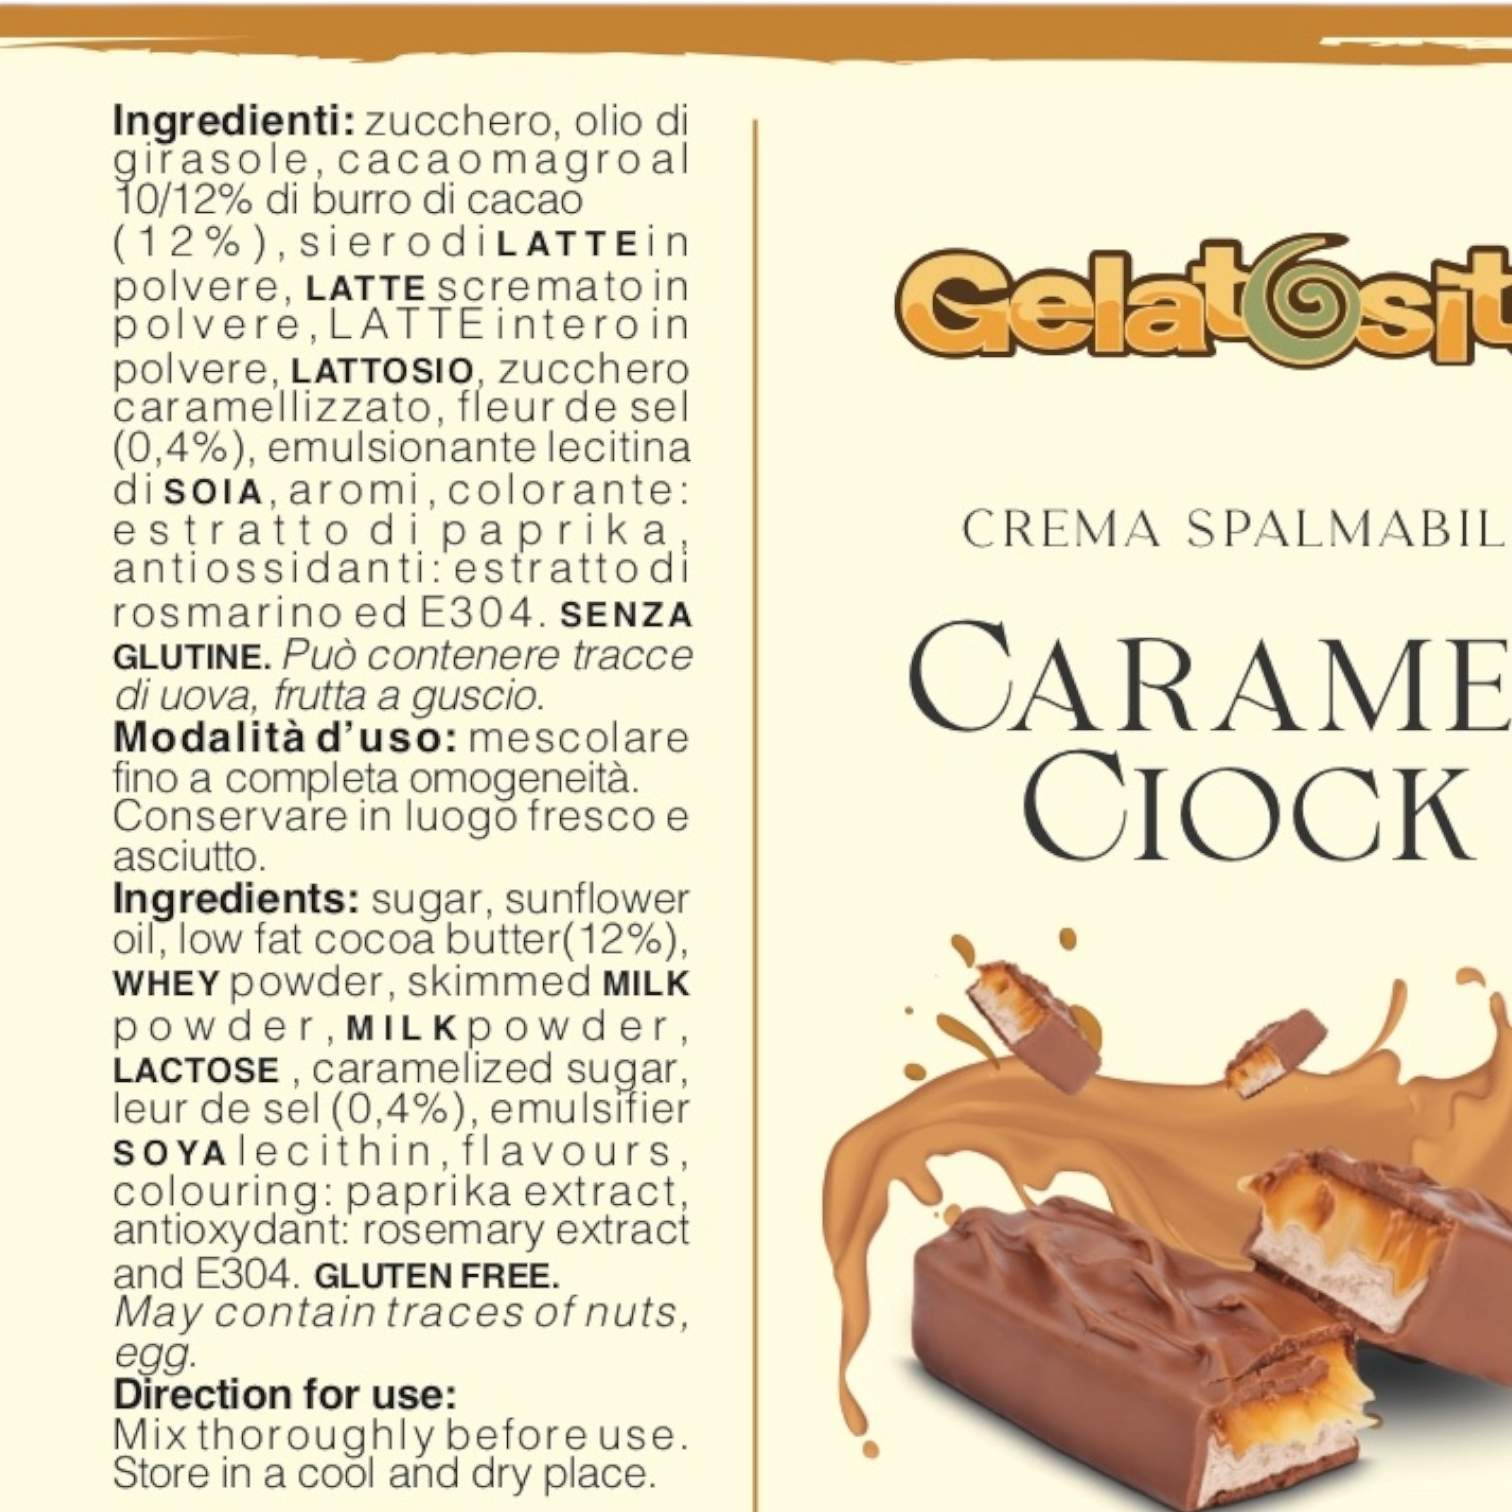 Ricarica Crema Caramel Ciock per "Fontana ChocoParty" 400g